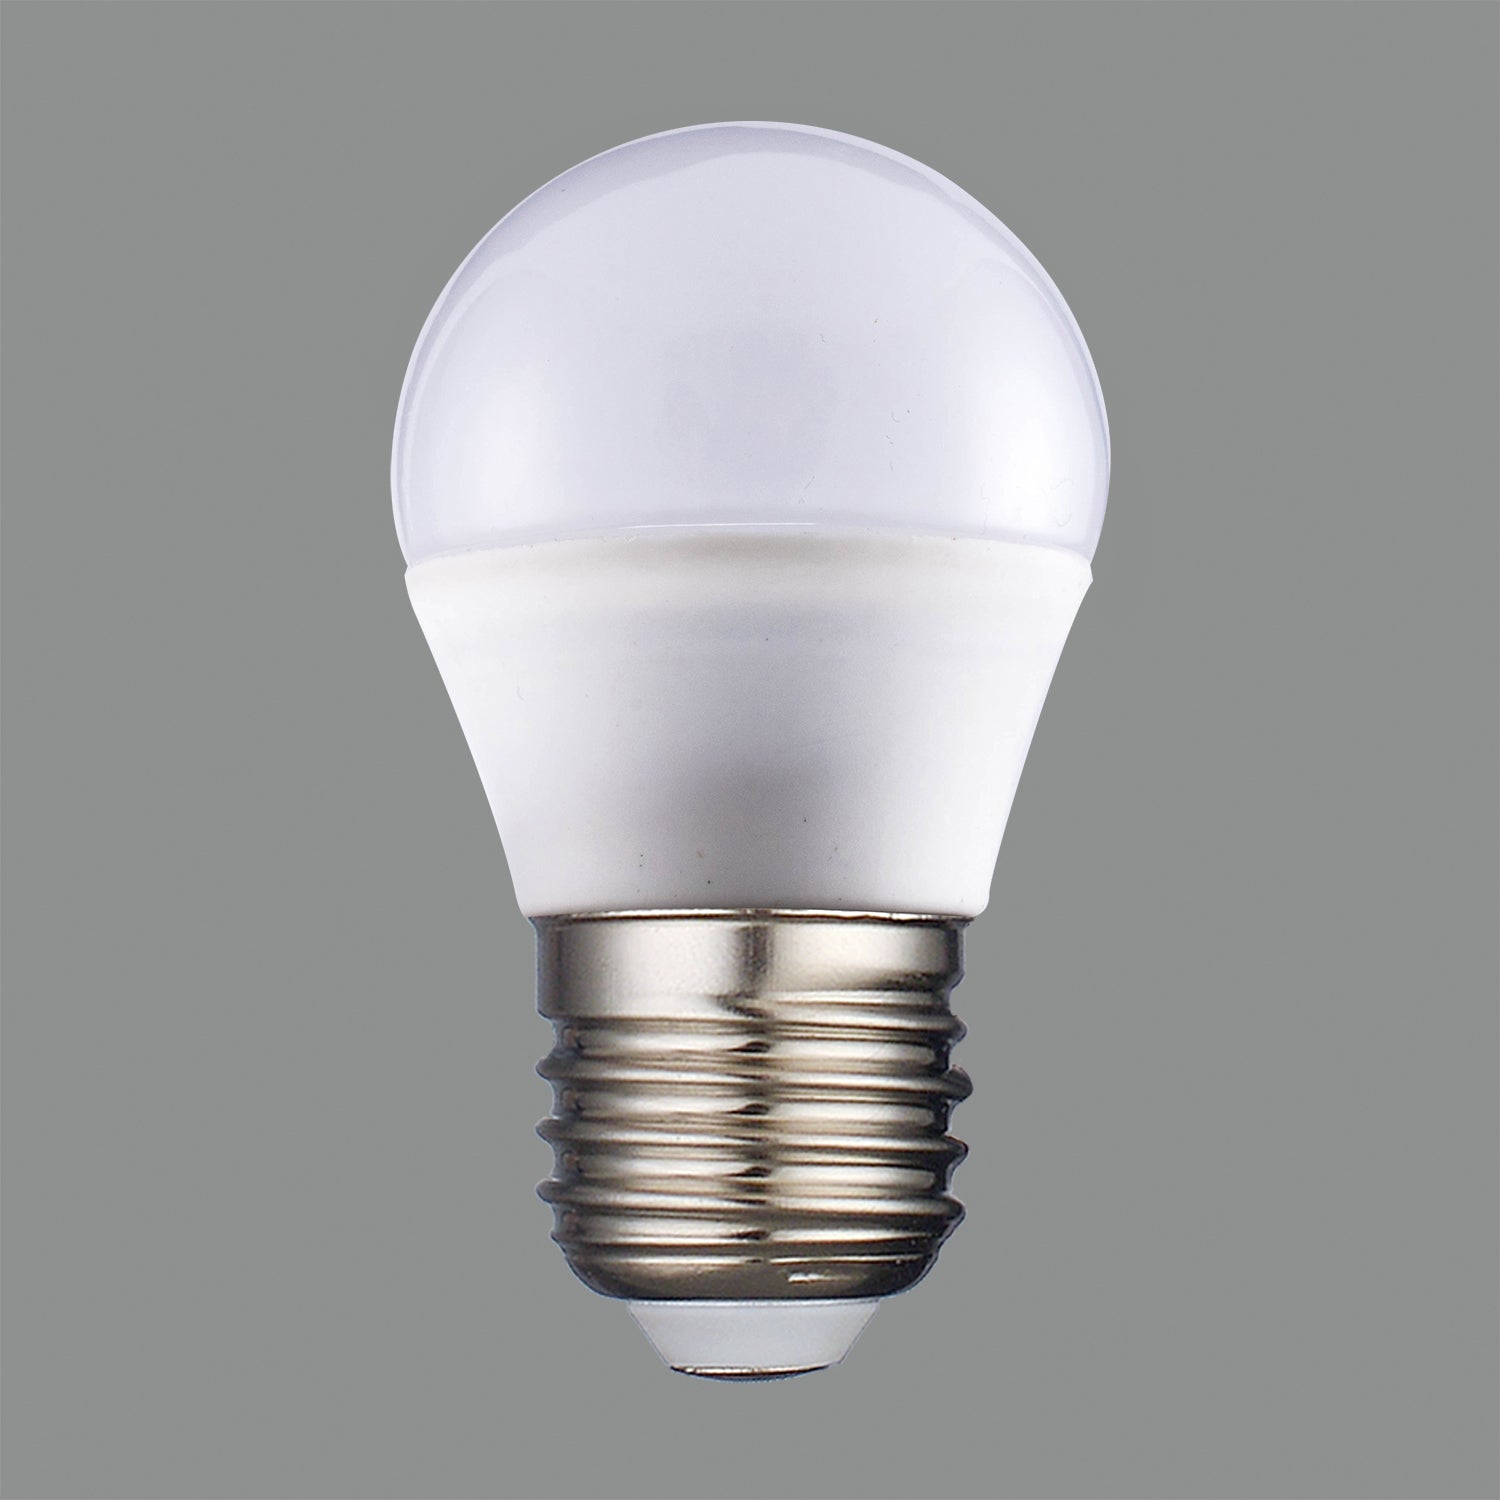 E27 Light Bulb